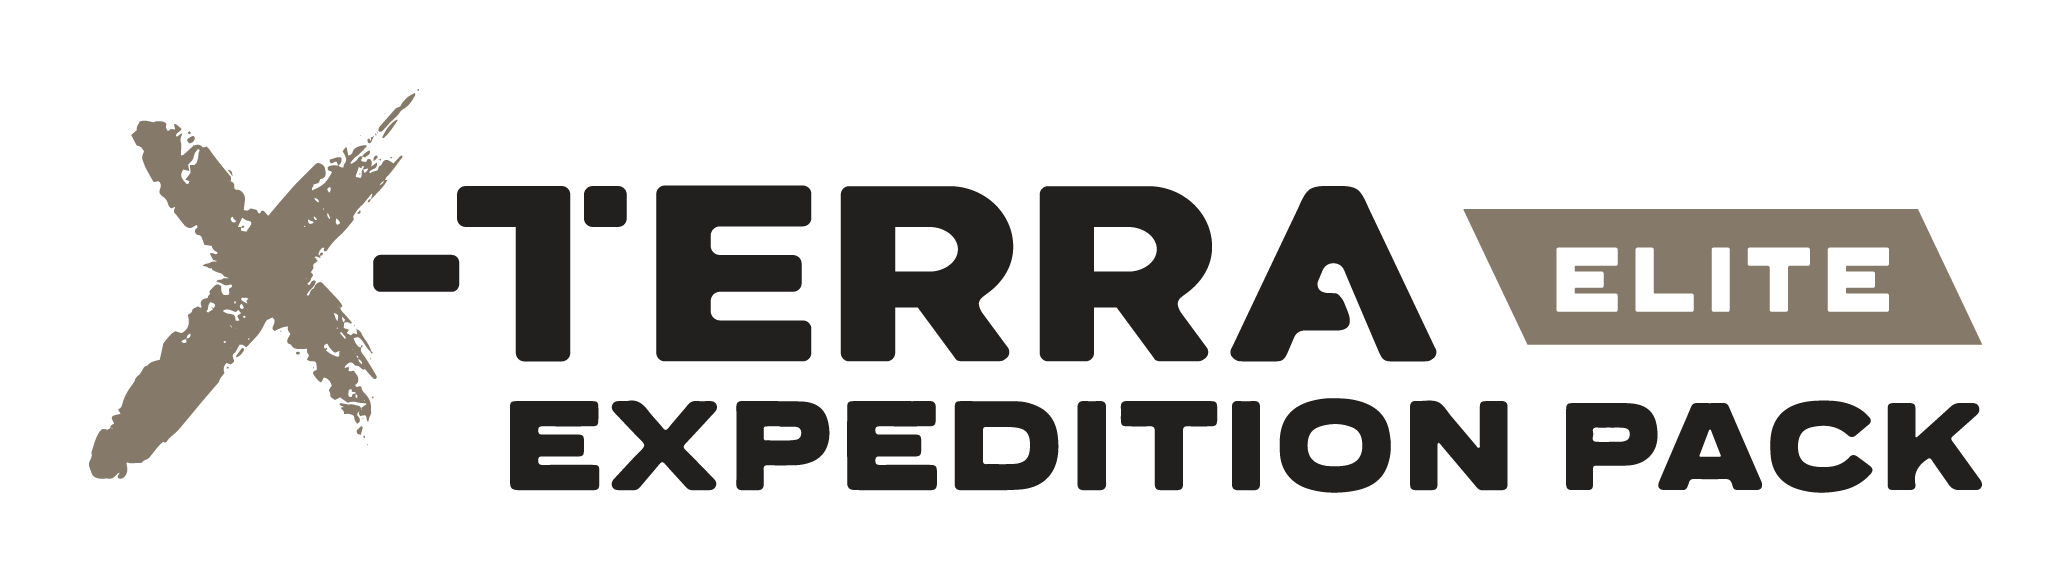 Minelab Xterra Elte Expedition Pack Logo